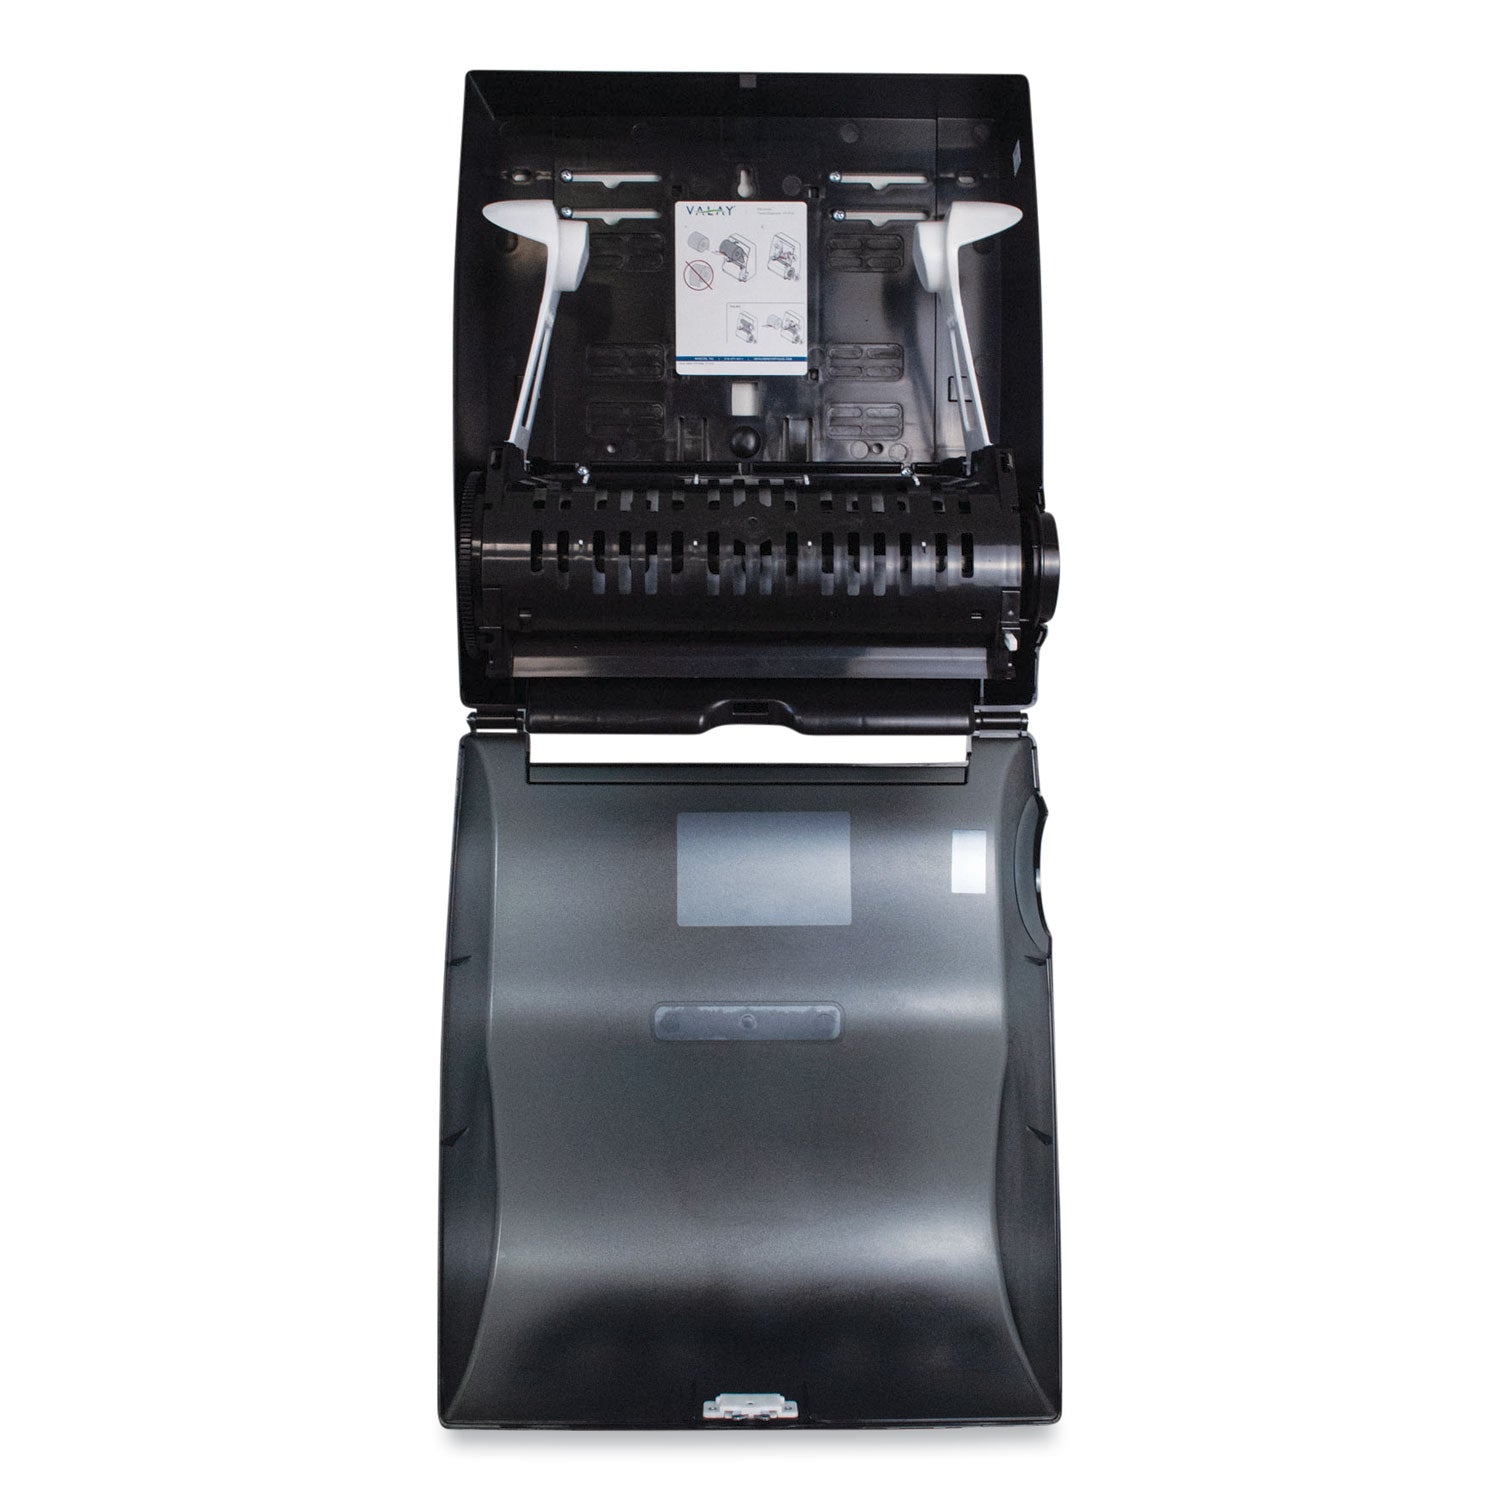 valay-10-inch-roll-towel-dispenser-1325-x-9-x-1425-black_morvt1010 - 7